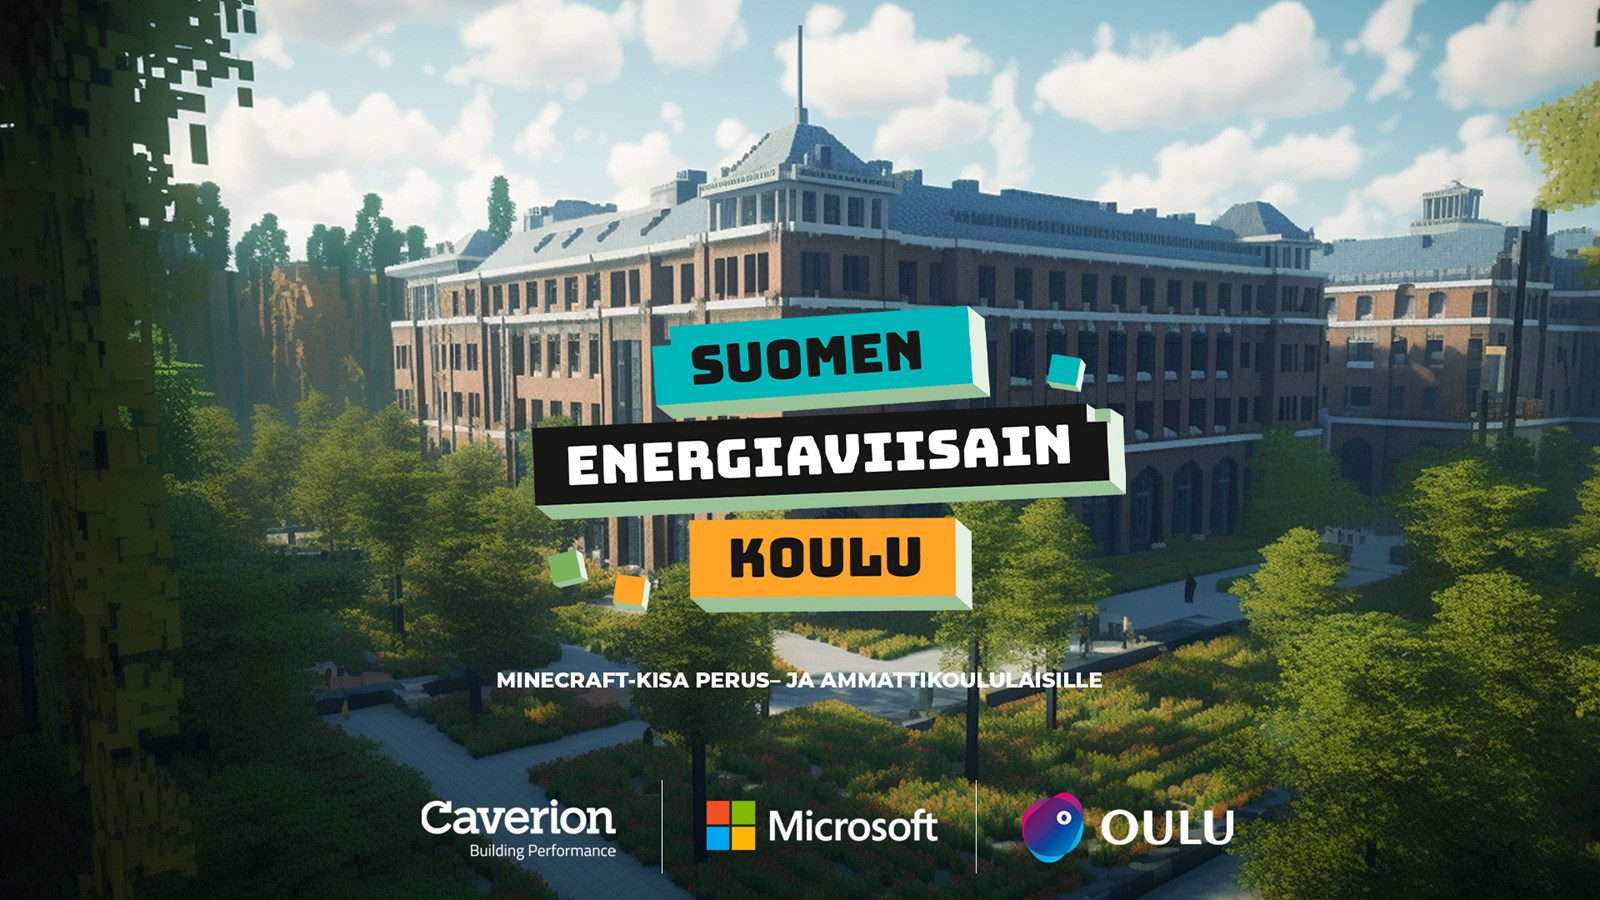 Suomen Energiaviisain Koulu - main image w logos - 16-9 - new.jpg